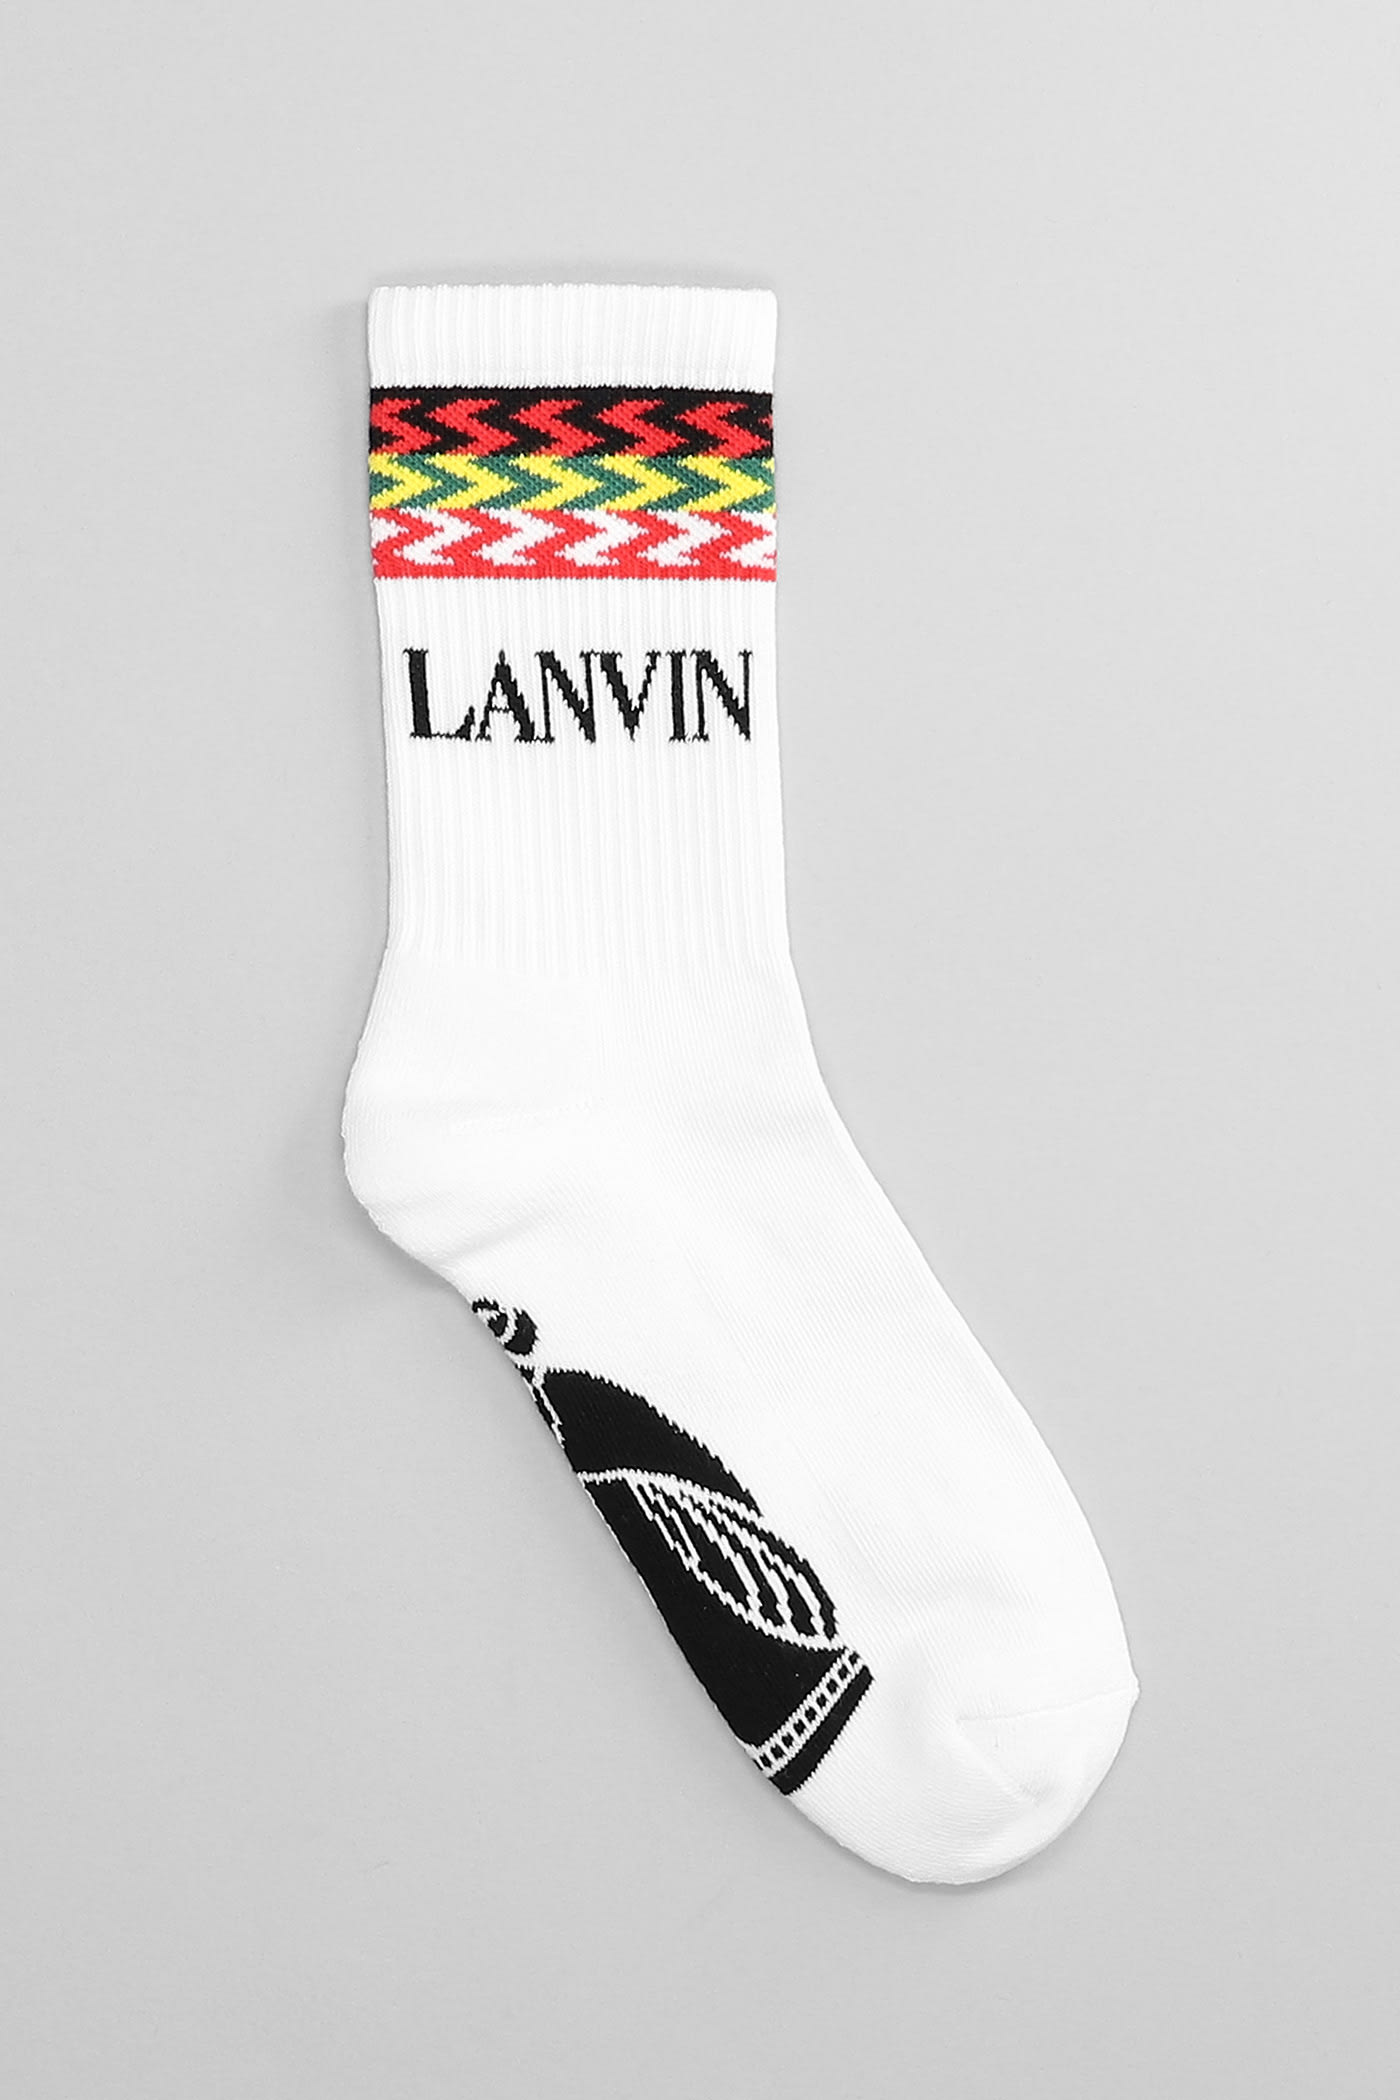 Shop Lanvin Socks In Black And White Cotton